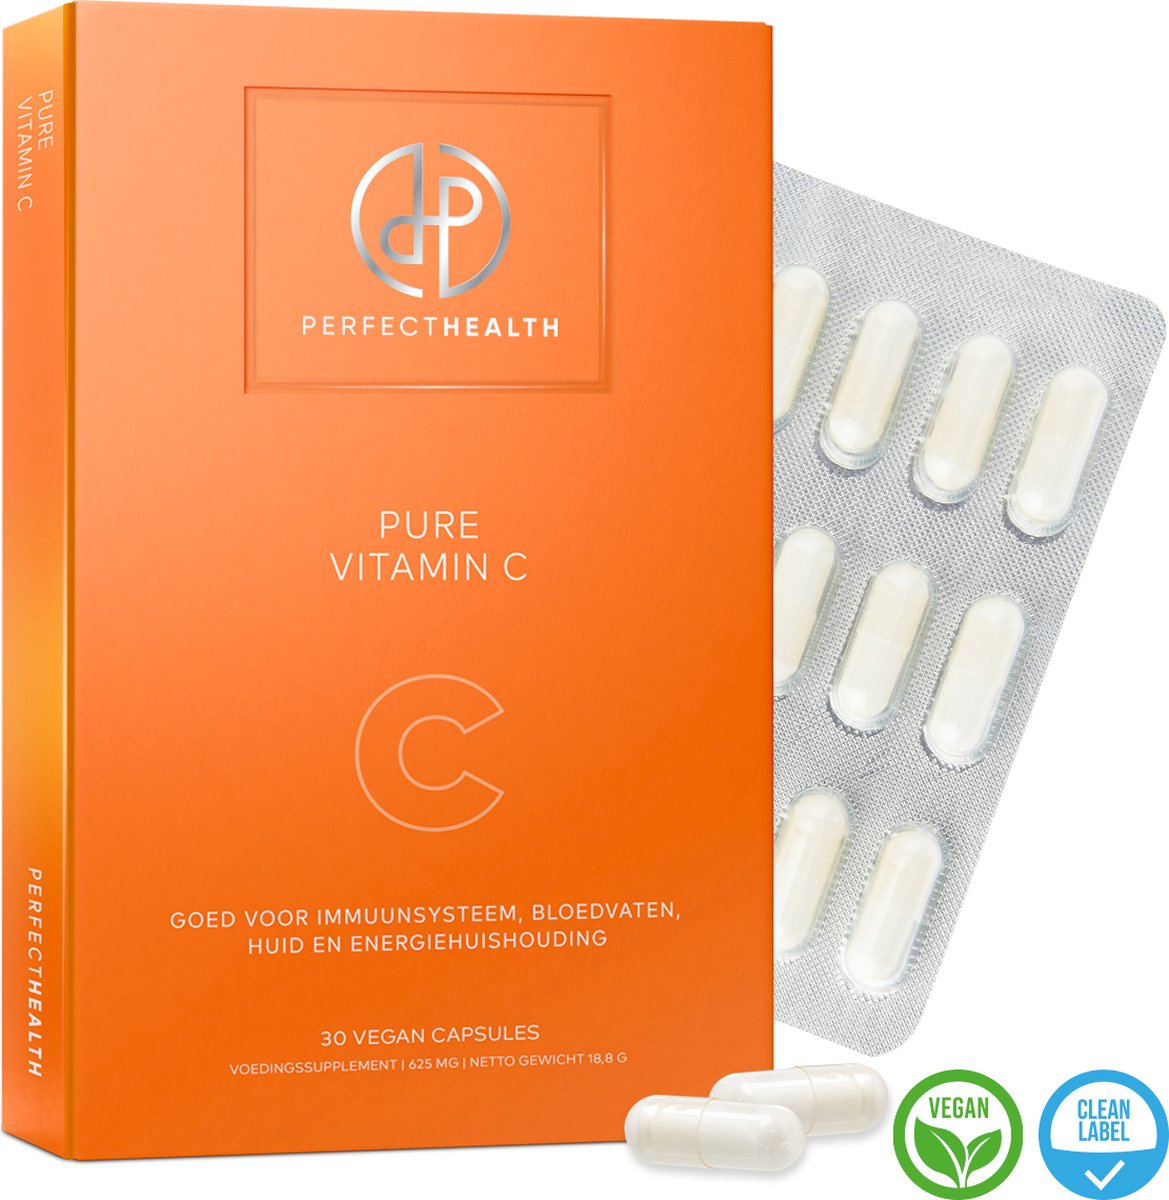 Perfect Health - Pure Vitamin C - Immuunsysteem, bloedvaten, huid en energiehuishouding - 30 Vegan Capsules